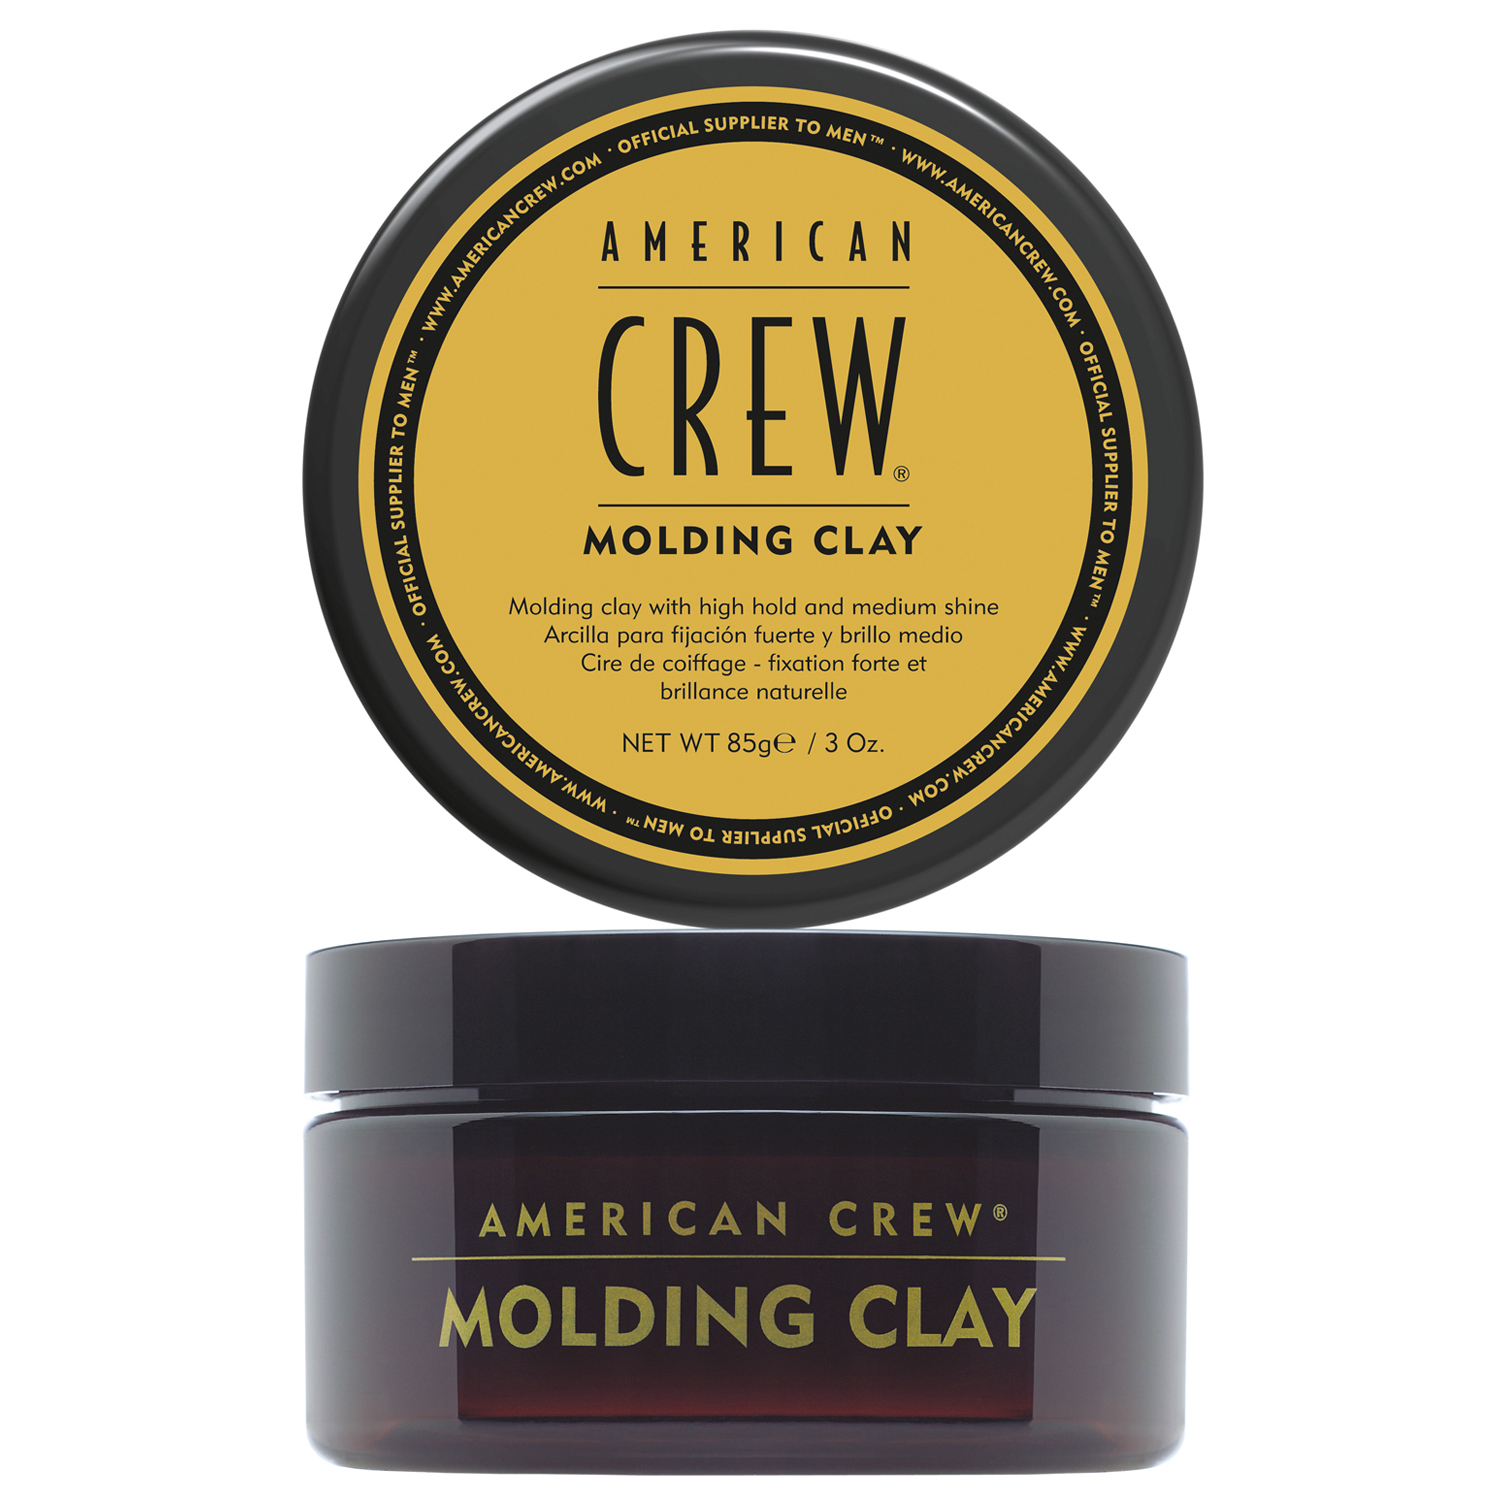 American Crew Моделирующая глина для укладки волос сильной фиксации Molding Clay, 85 г (American Crew, Styling)